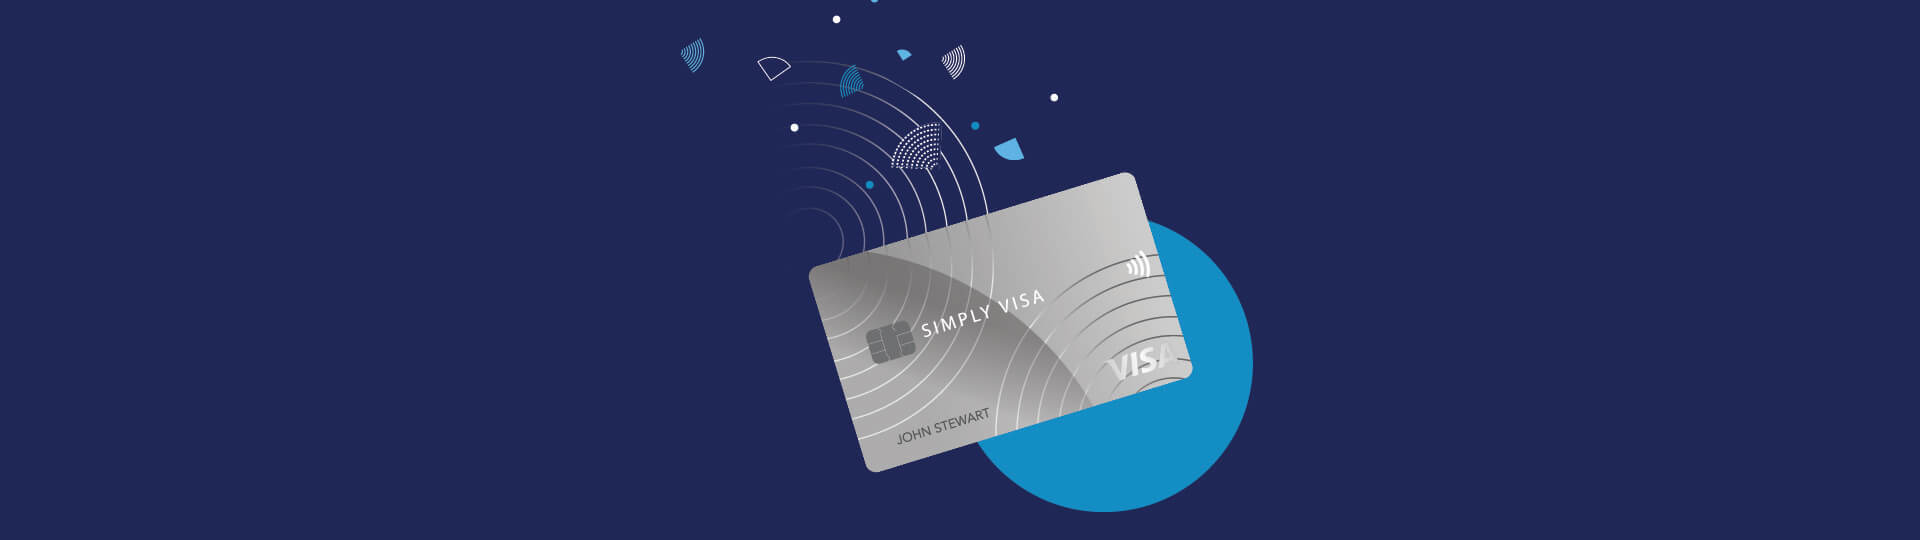 Simply Visa balance transfer card